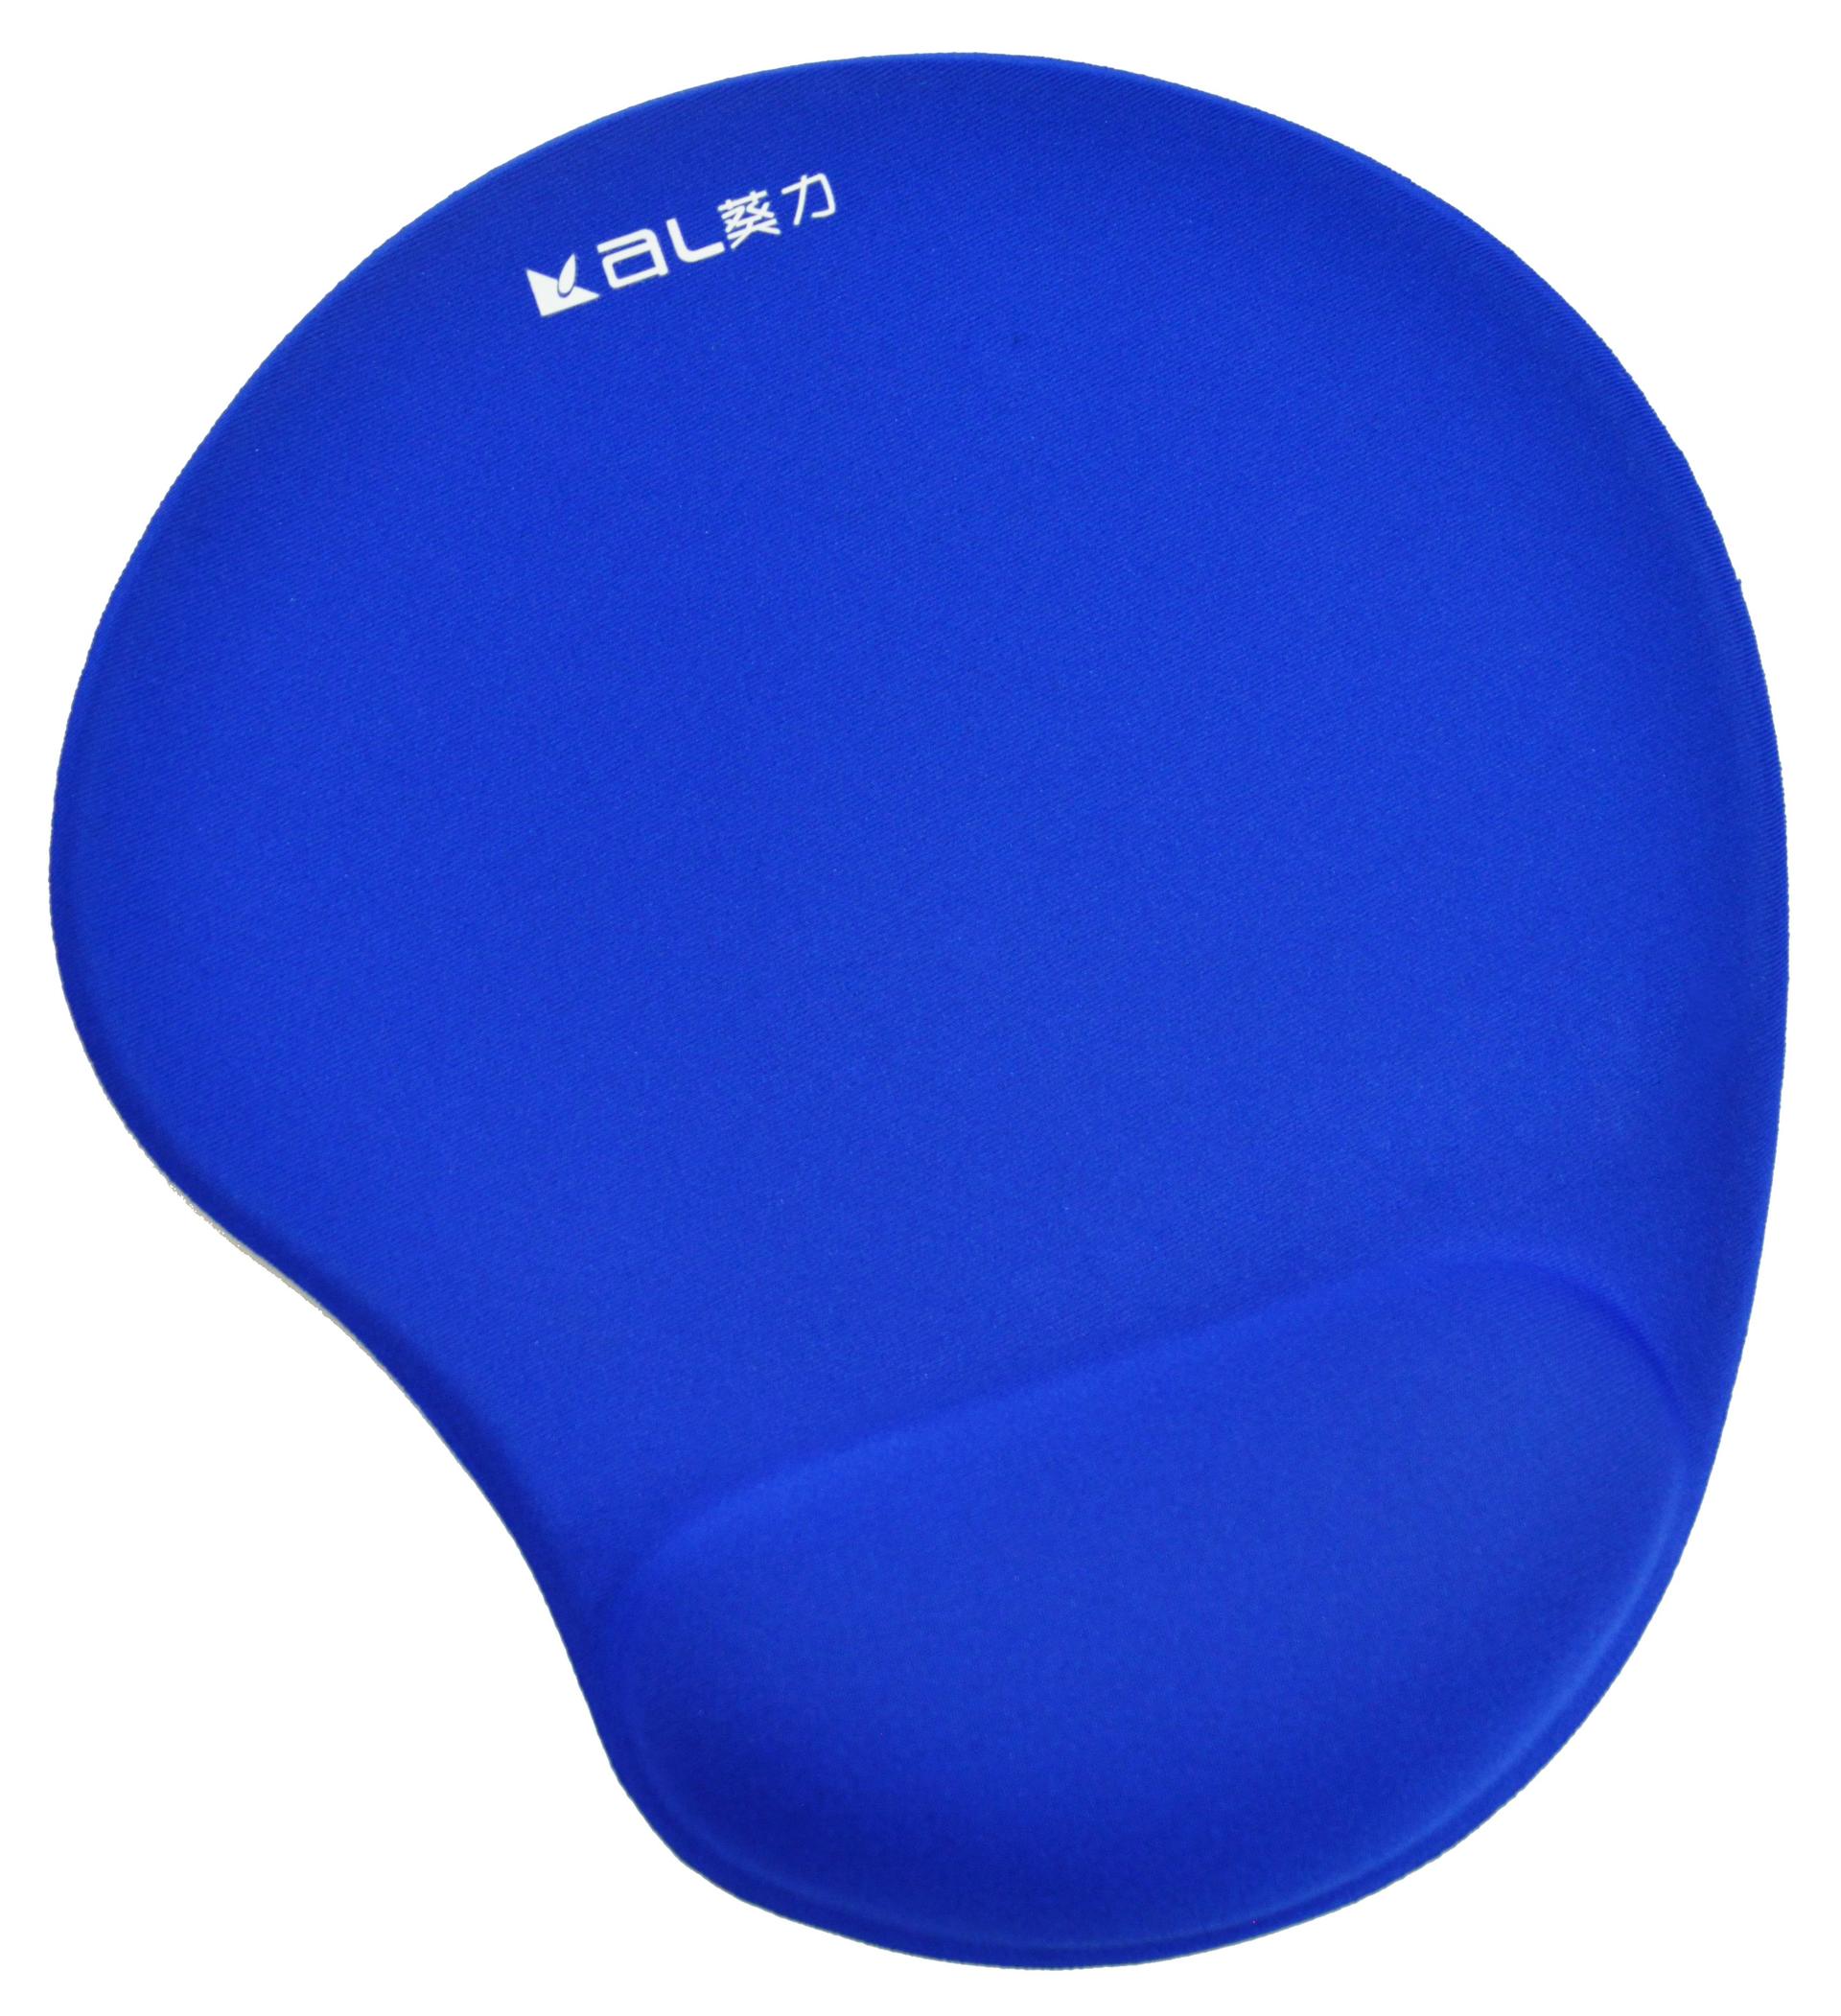 KLH-3001  PU cloth wrist mouse pad